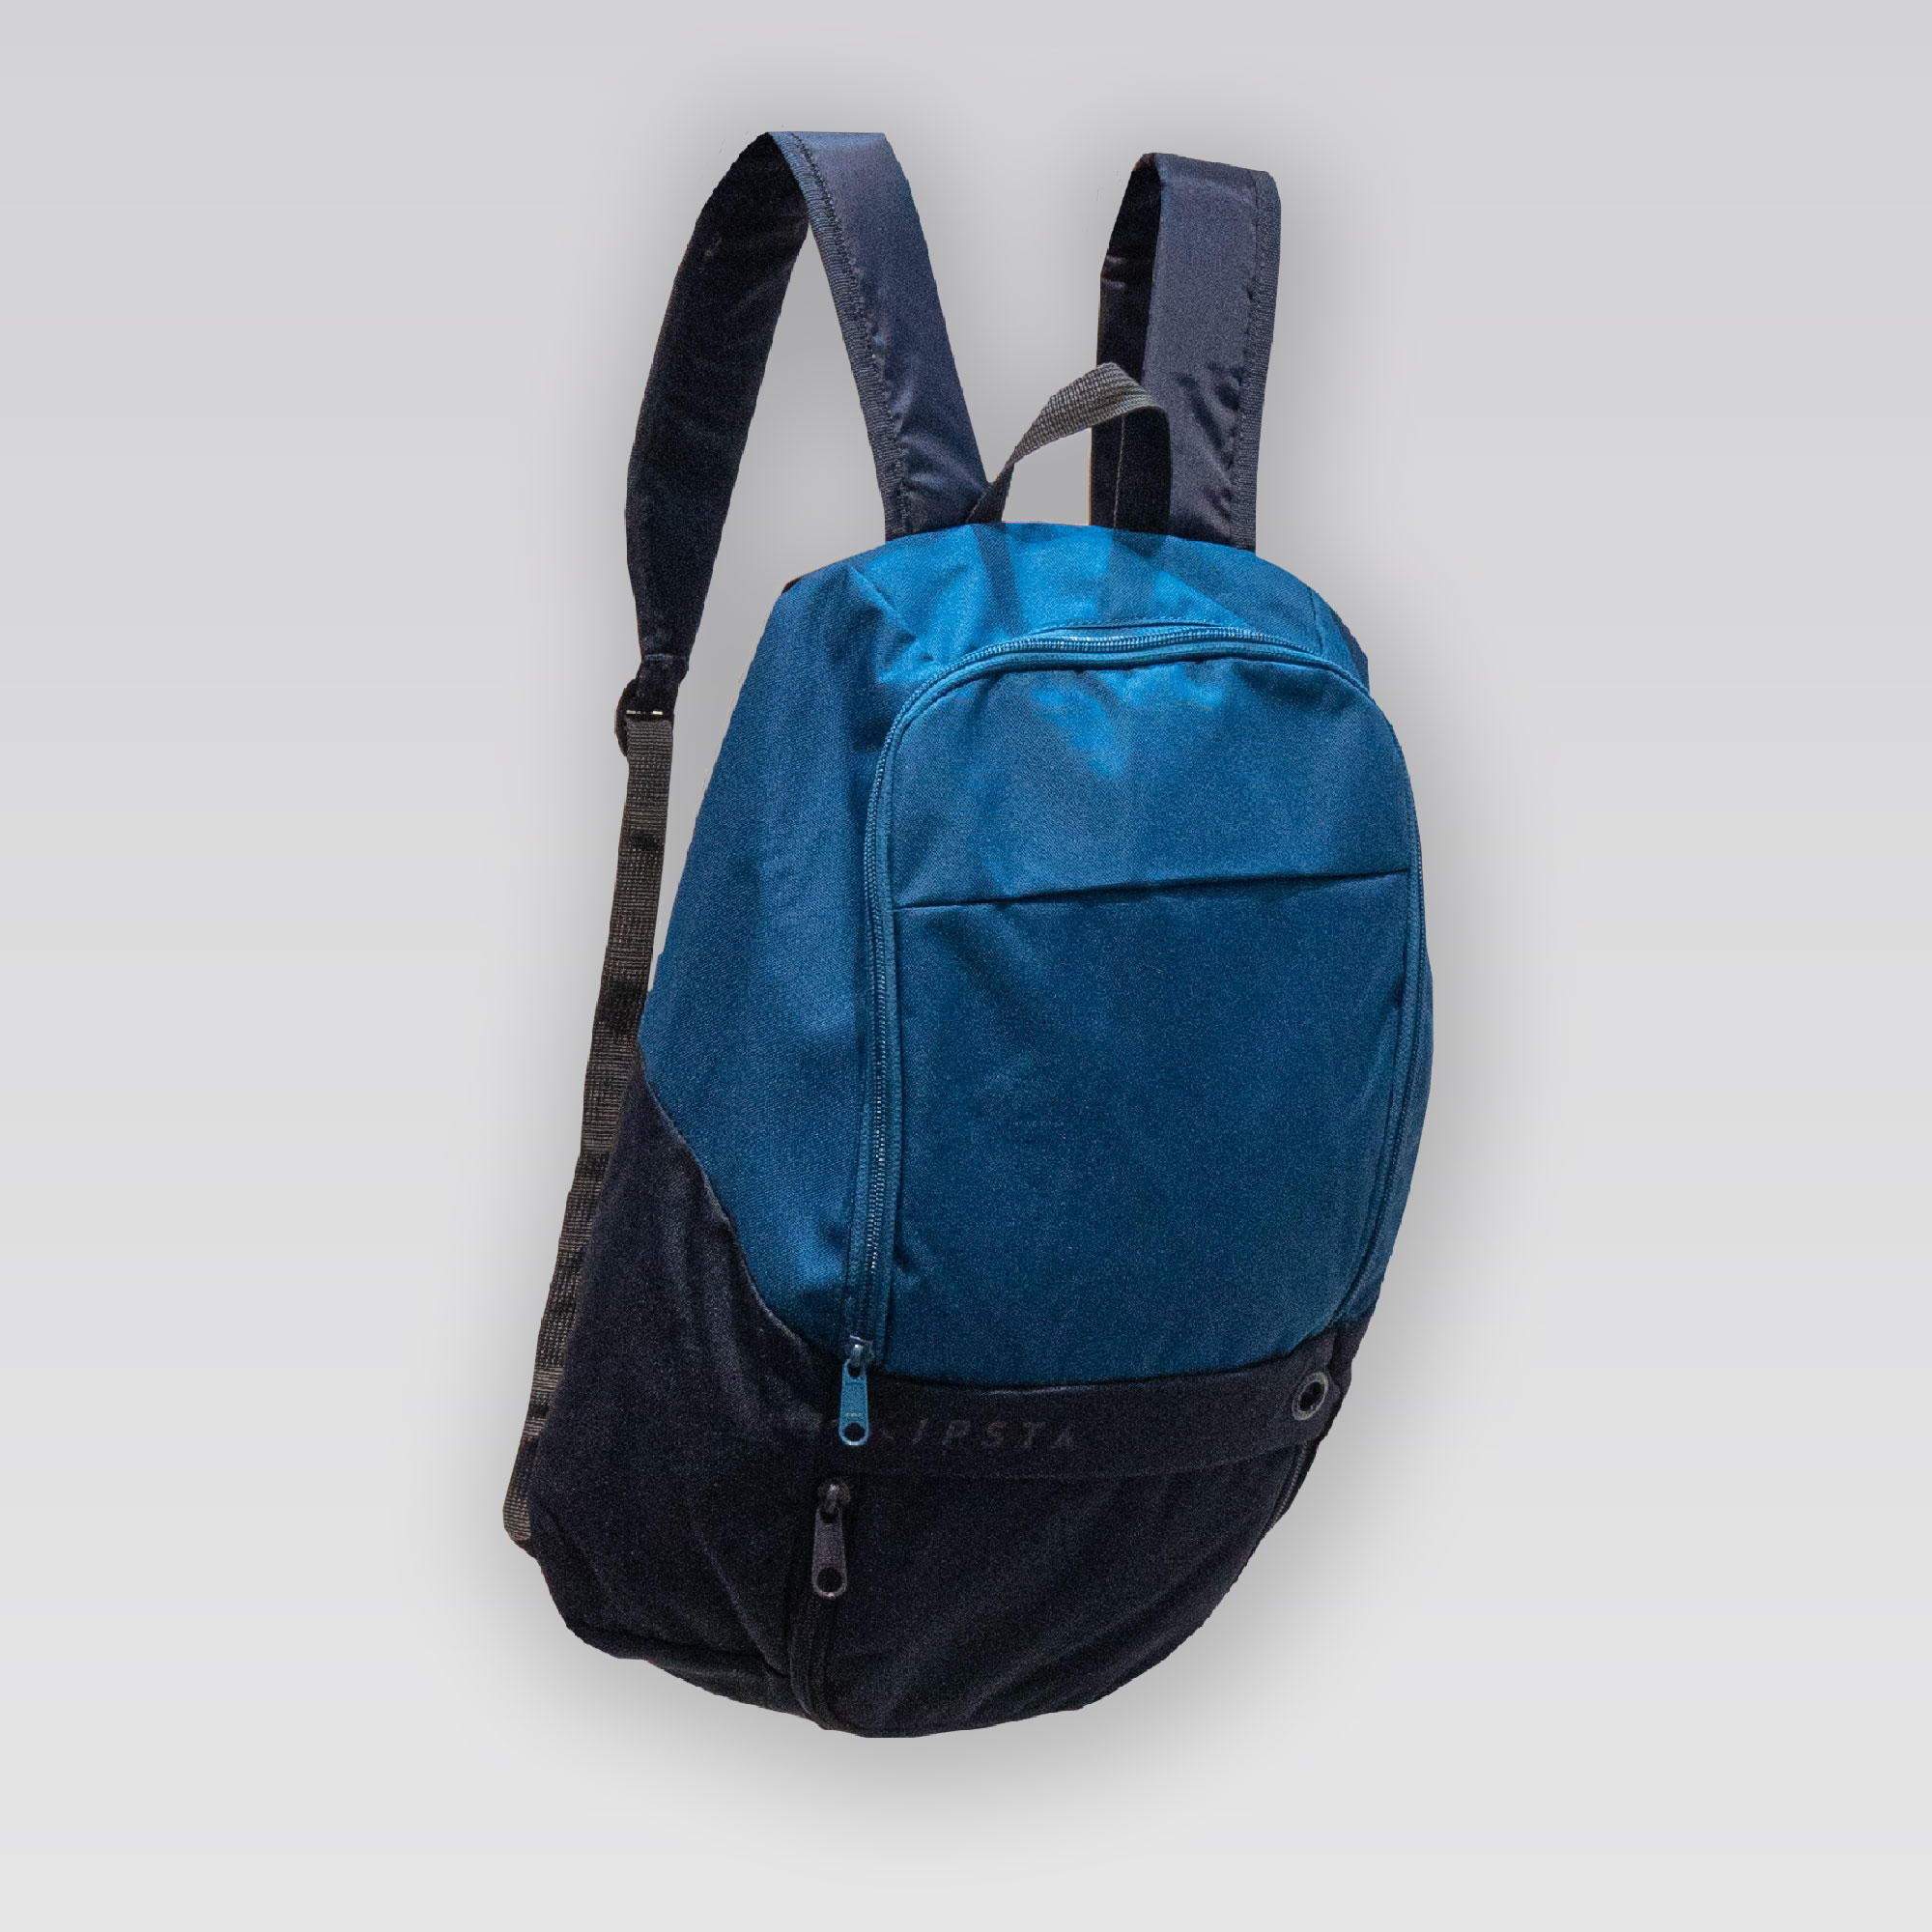 Decathlon Football 20L Bag Essential Large Capacity - Blue, Compact Design,  Durable, Multiple Compartments, Portable - Kipsta | Lazada